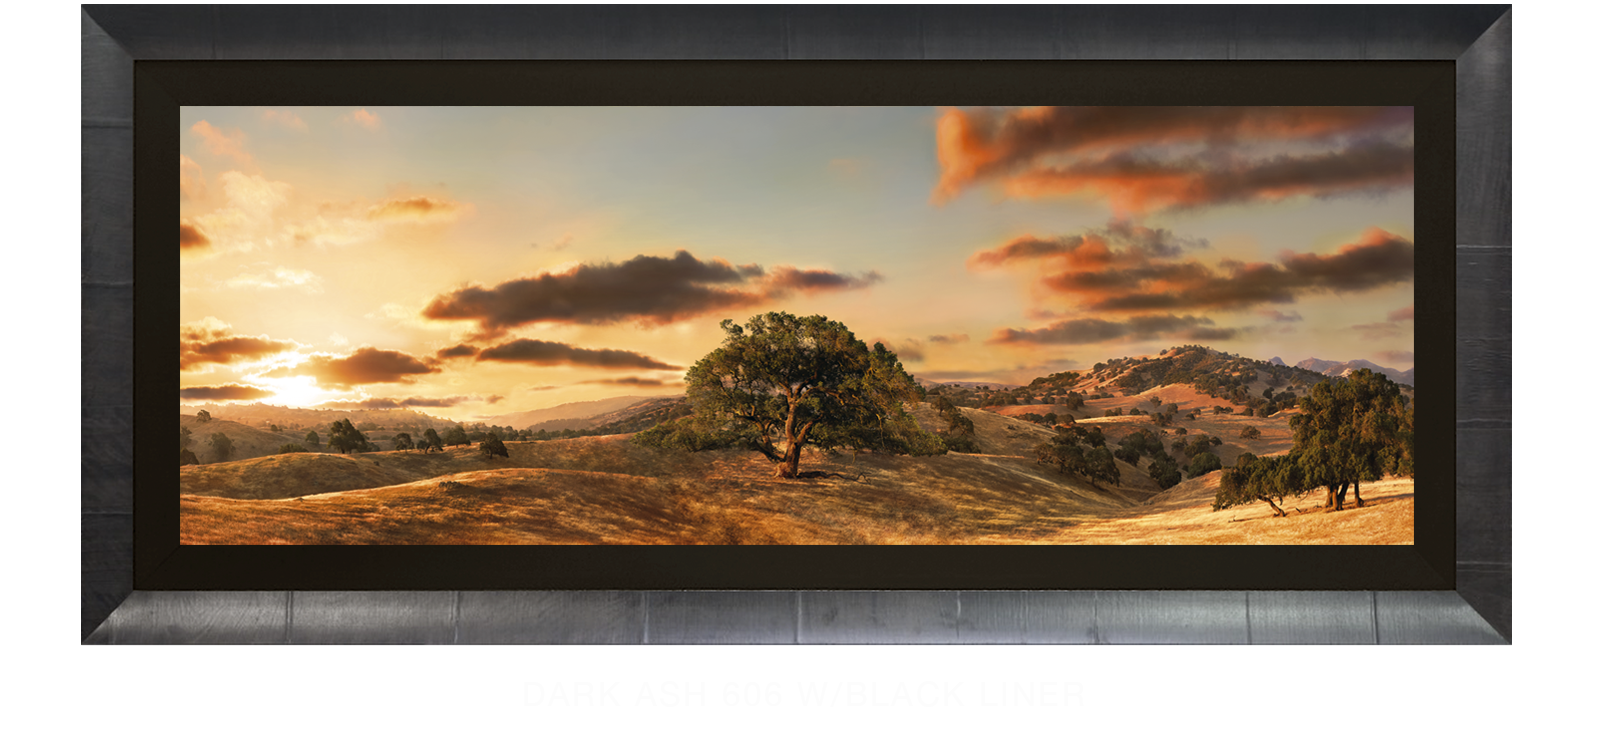 17OAKS Dark Ash 606 w_Blk Liner T